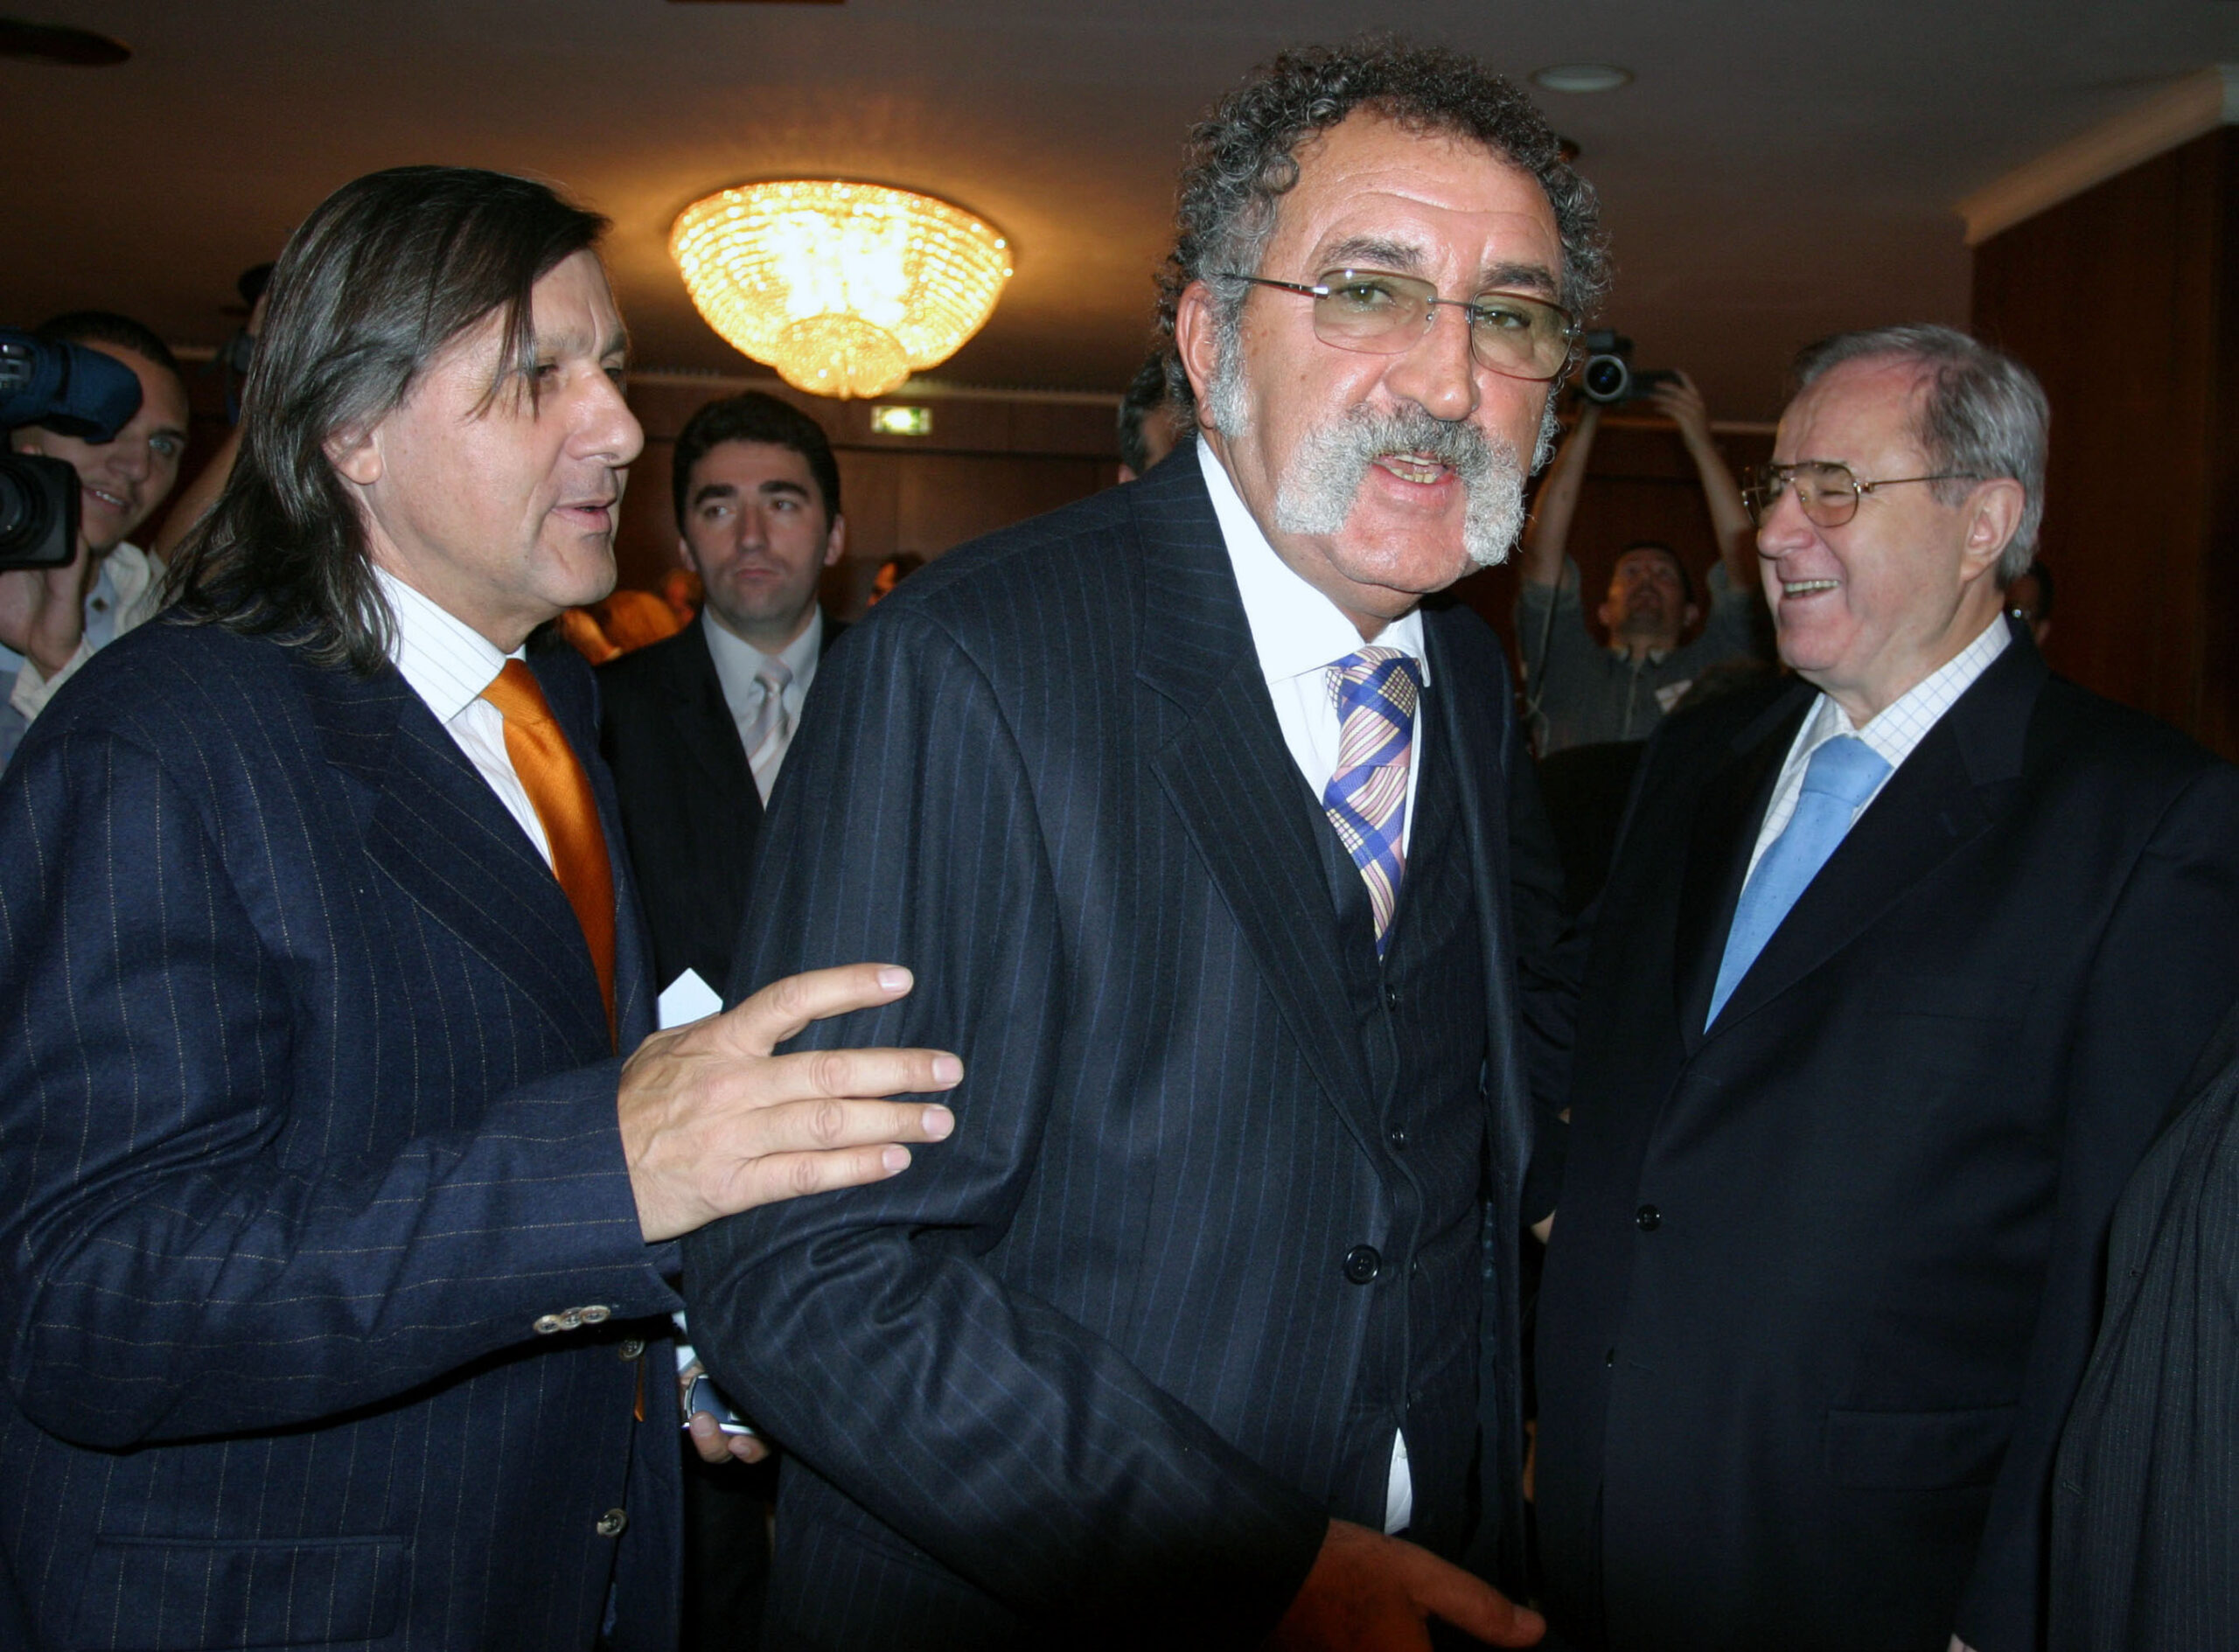 Comitetul Olimpic Roman. In imagine, Ilie Nastase, Ion Tiriac si Viorel Paunescu